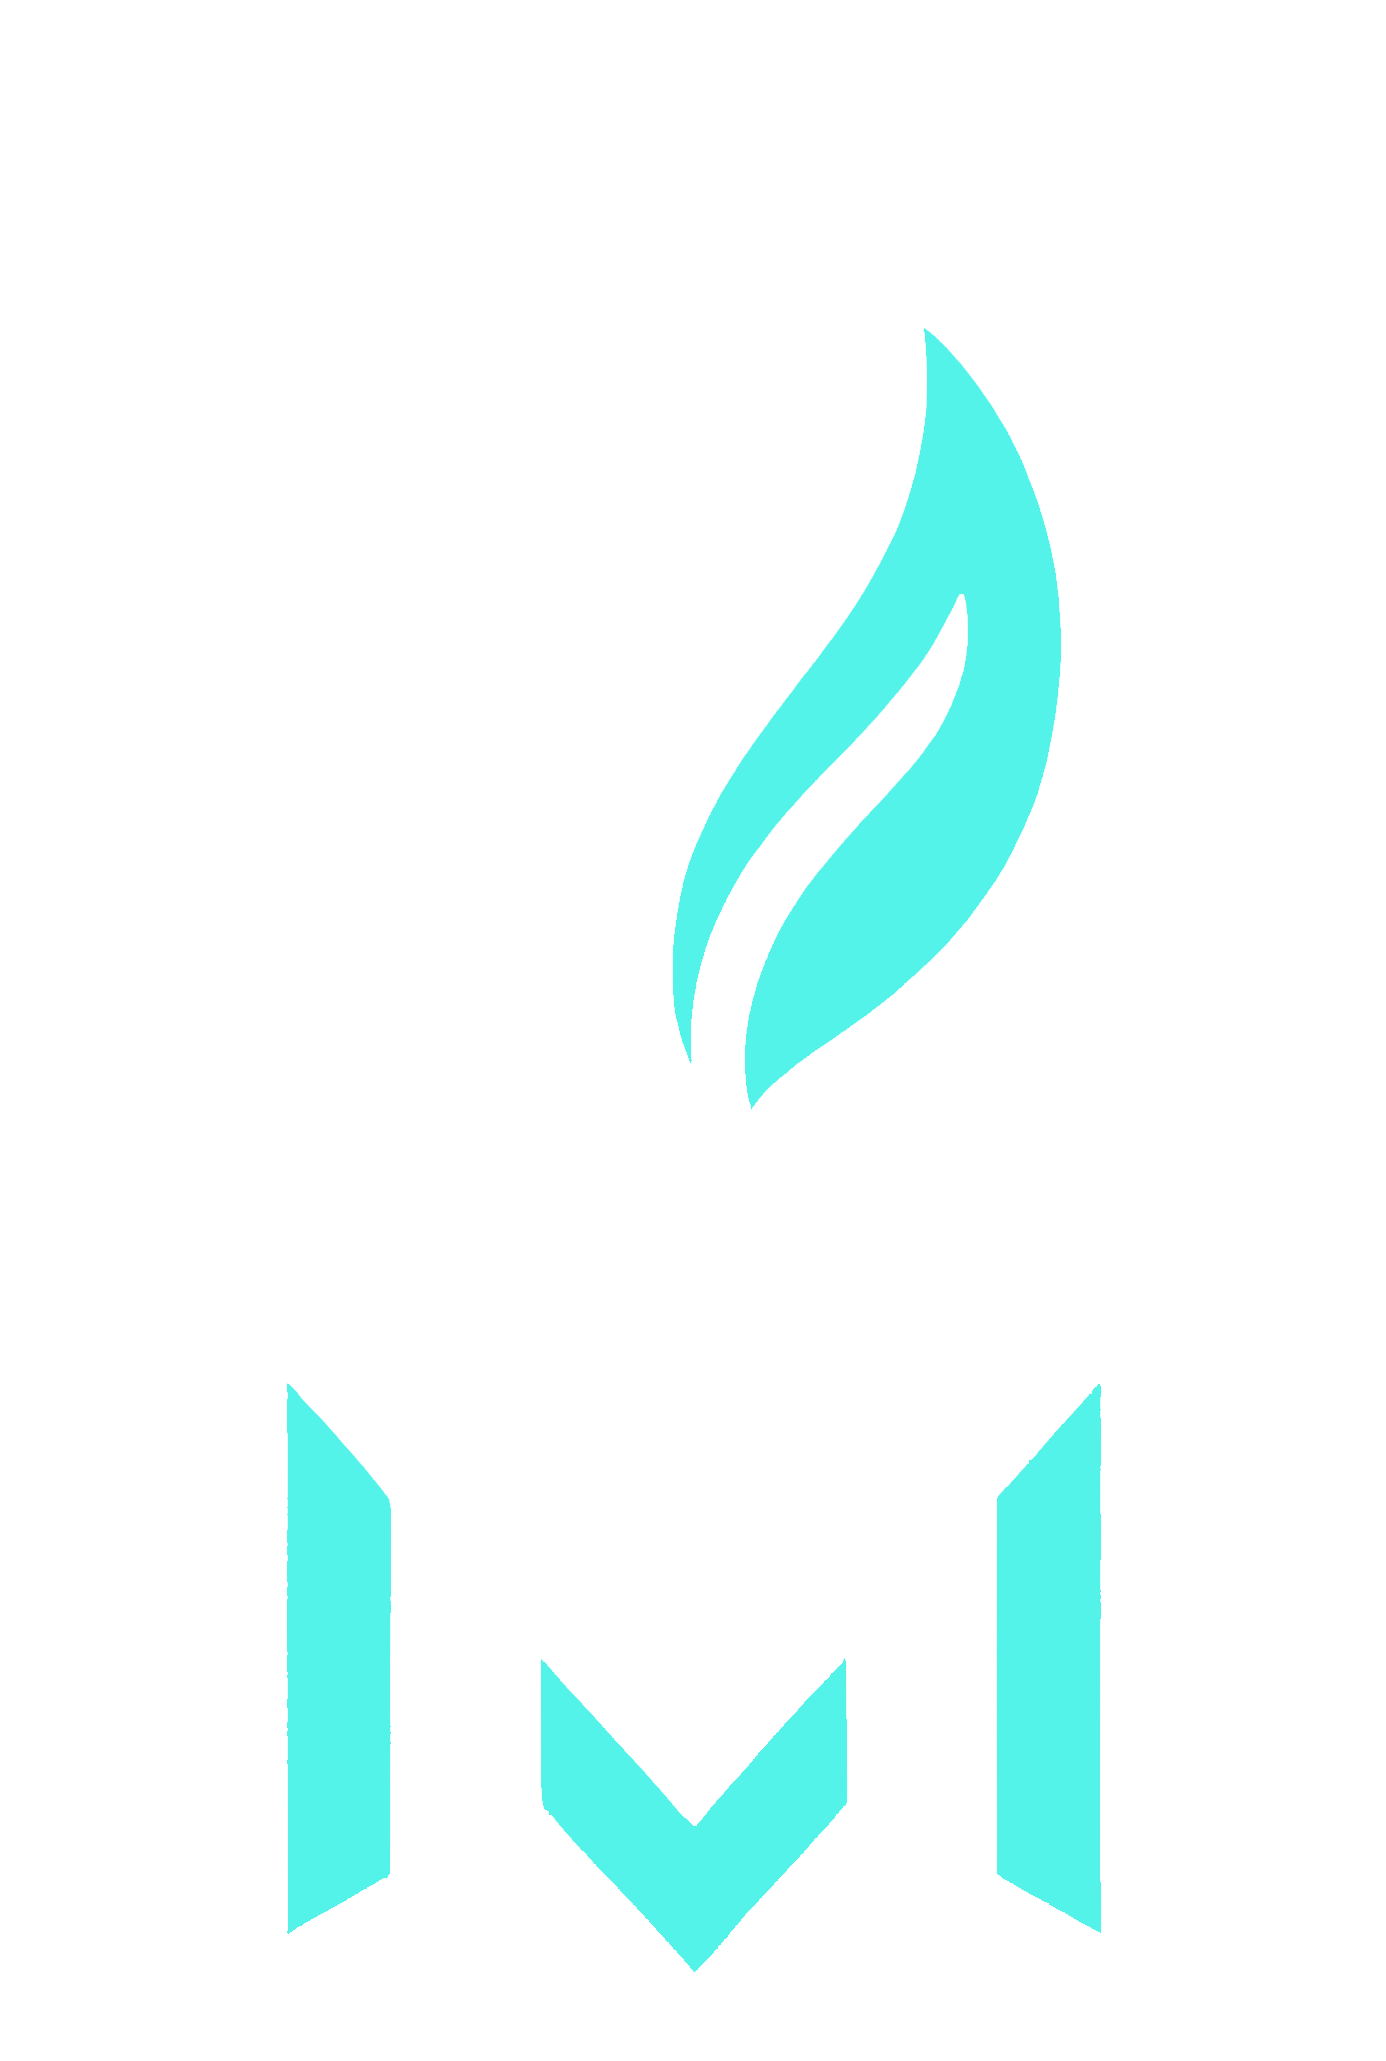 Modafiyaz - Brand Enterprise